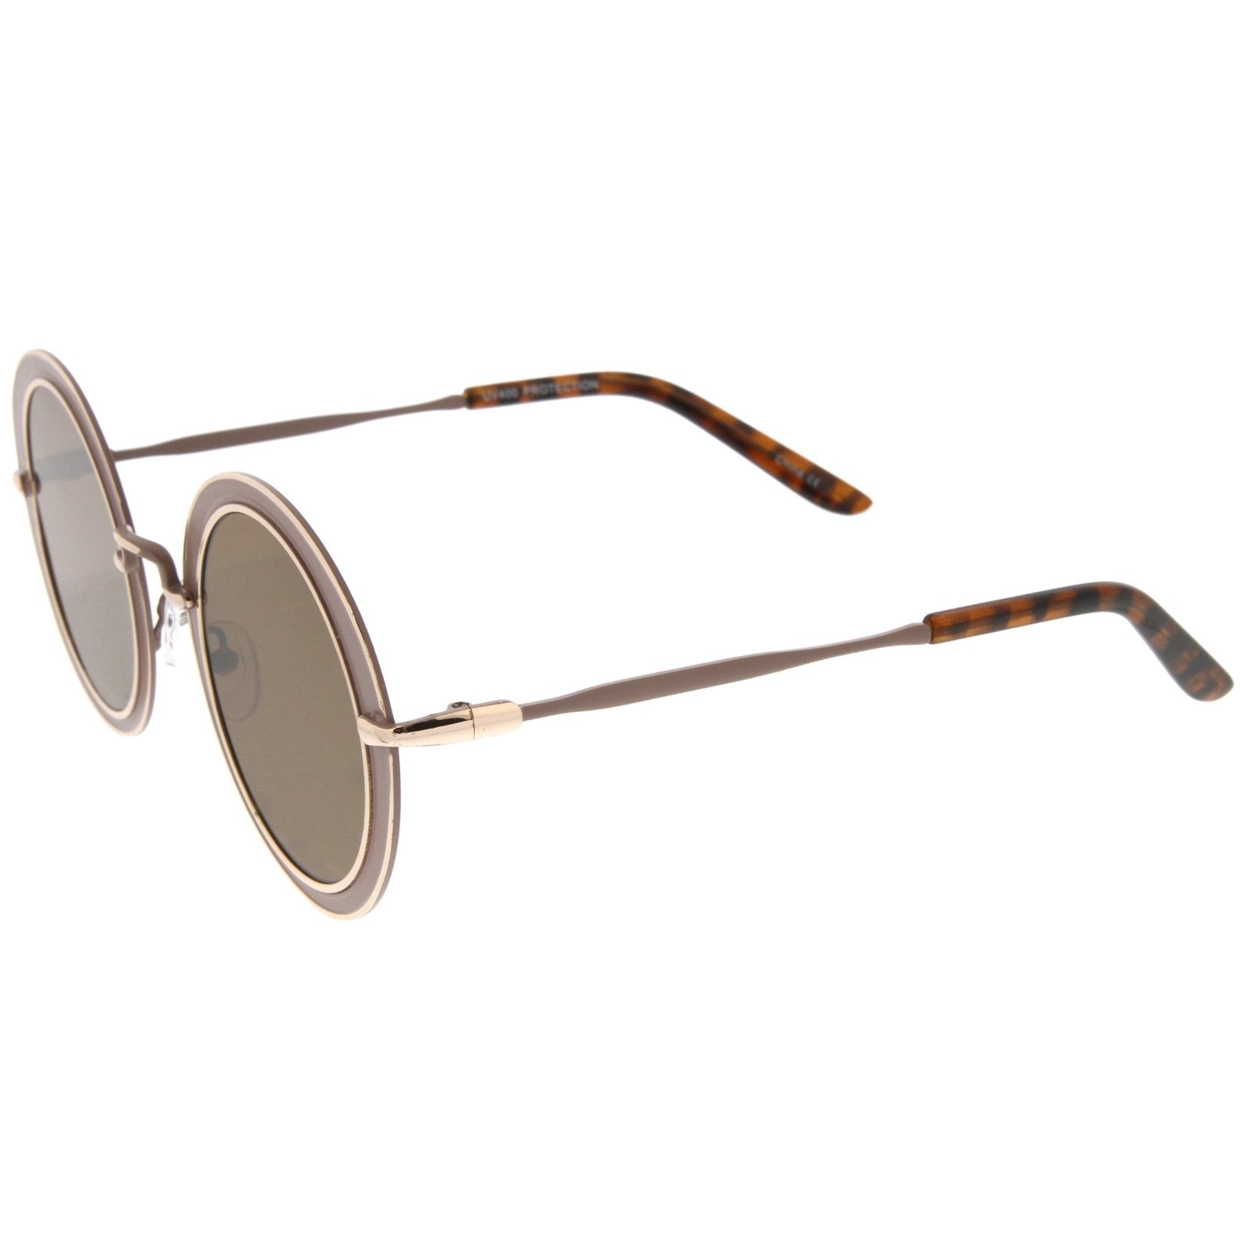 Modern Metal Frame Matte Border Colored Mirror Flat Lens Round Sunglasses 48mm - Black-Silver / Blue Mirror